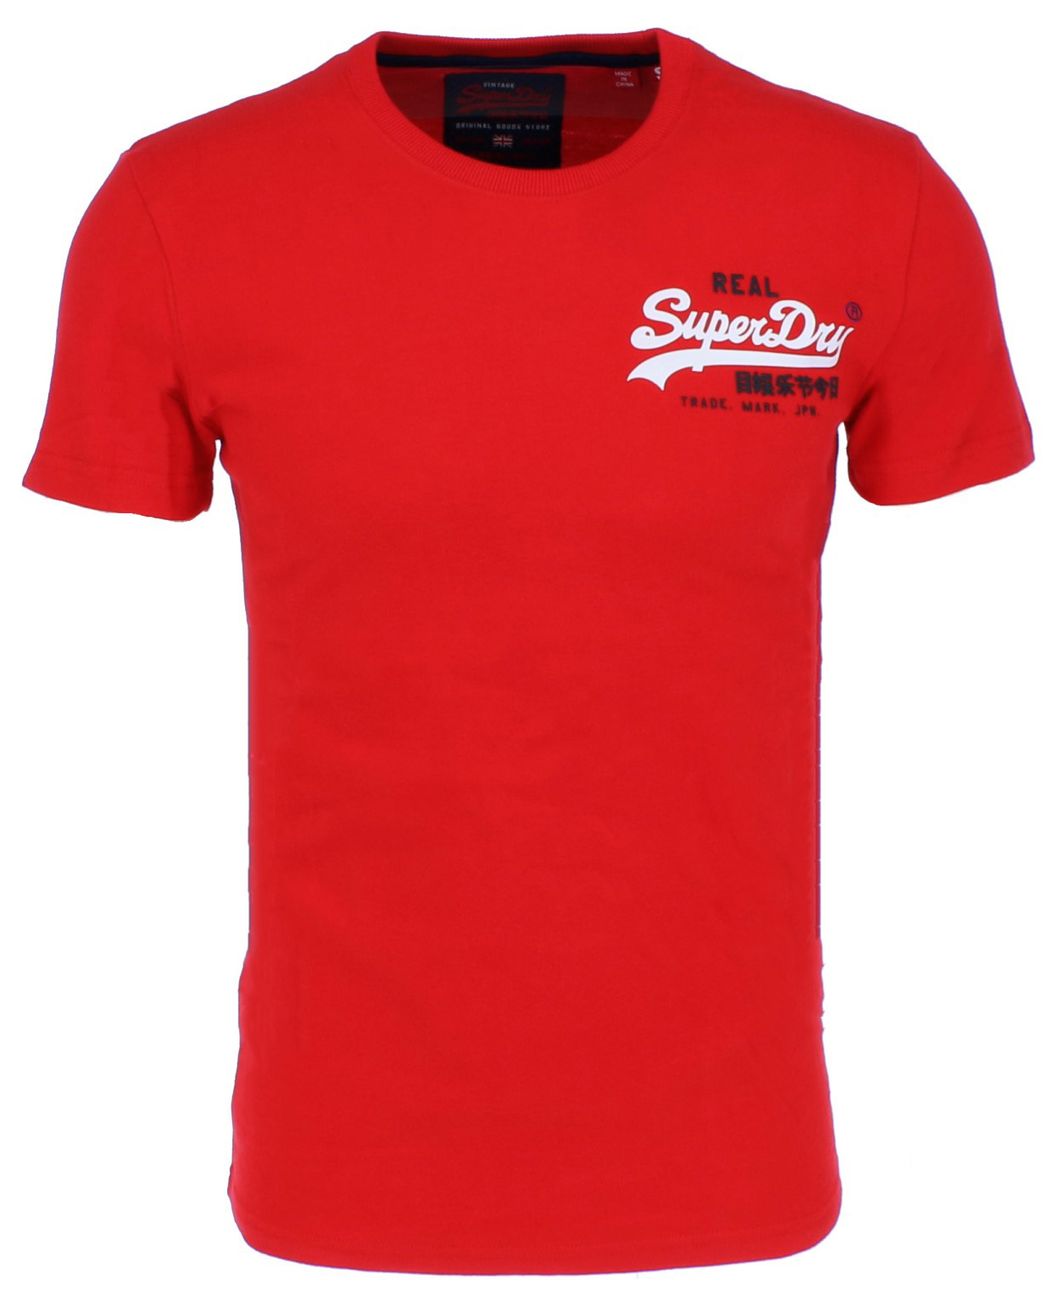 Superdry VINTAGE LOGO RACER TEE Herren T-Shirt - Superdry - SAGATOO - 5057842457559